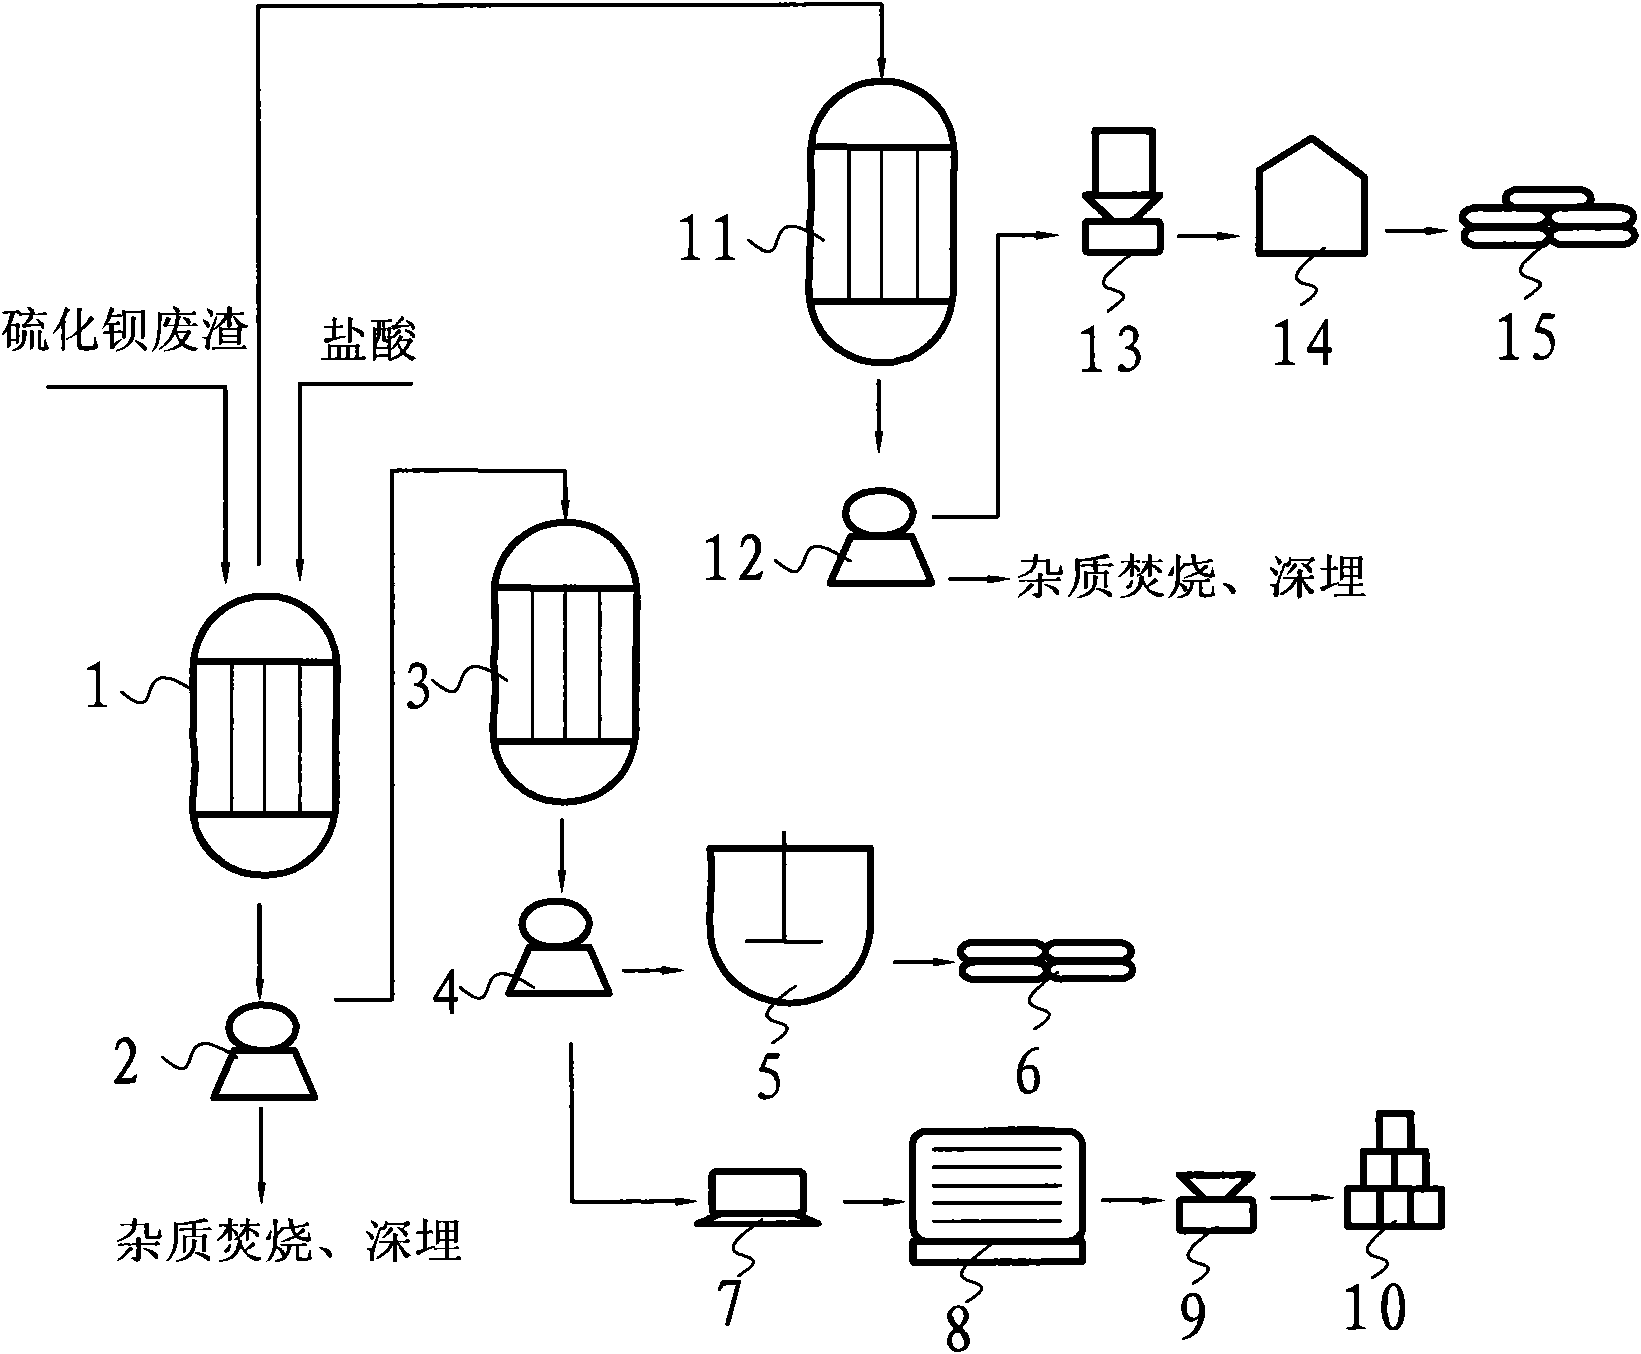 Method for coproducing sodium sulphide and industrial salts while preparing precipitated barium sulfate from barium sulfide waste slag